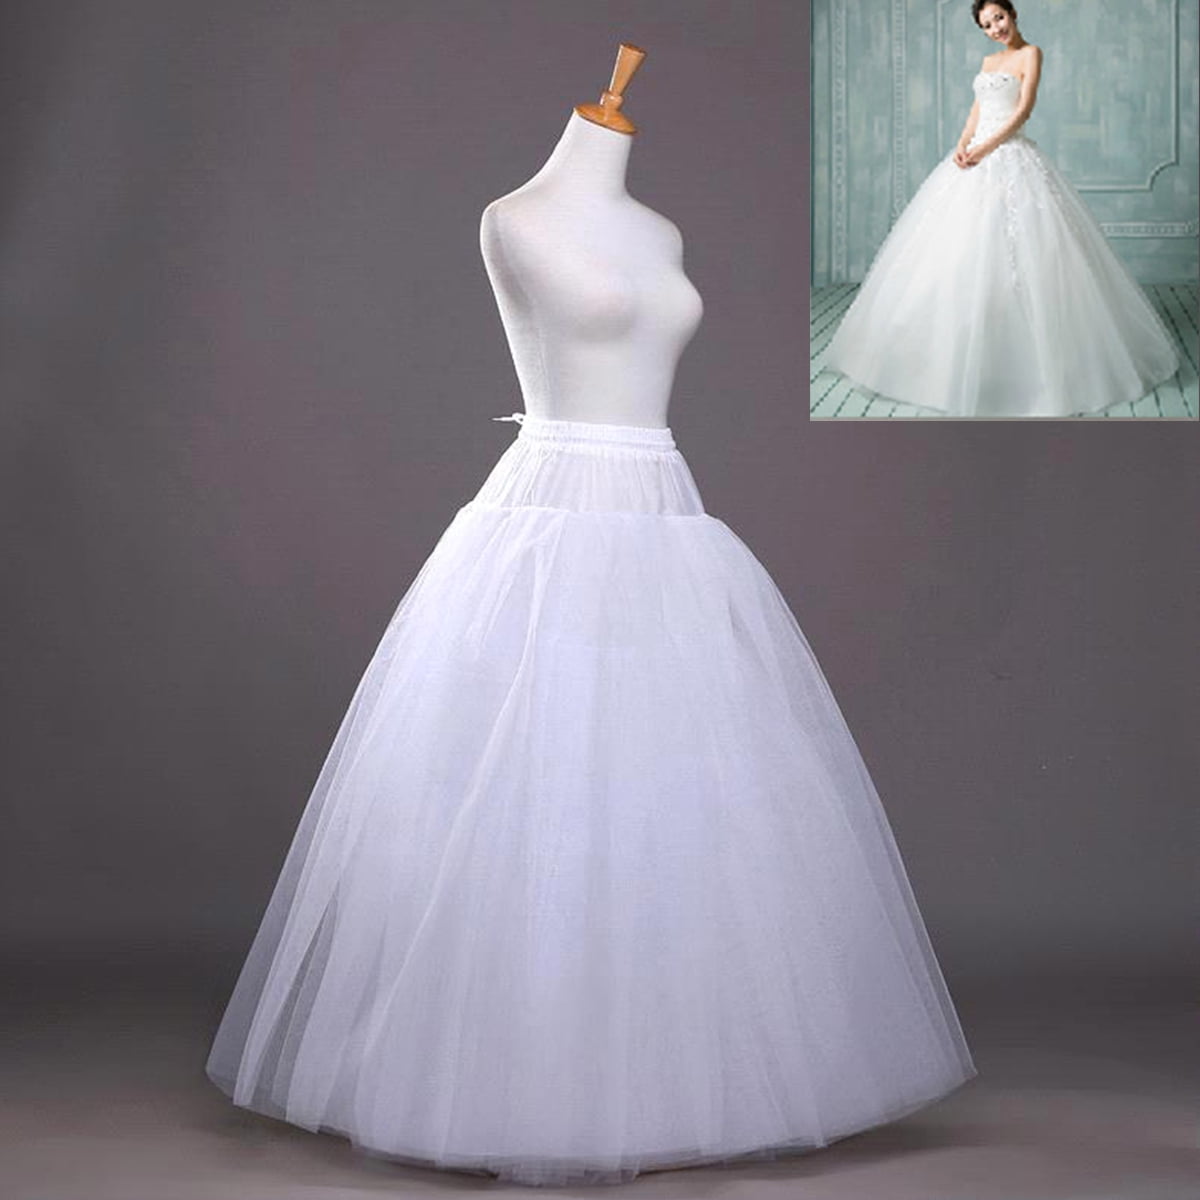 2019 Wedding Petticoat Crinoline Slip Underskirt Bridal Dress Hoop Vintage Slips 